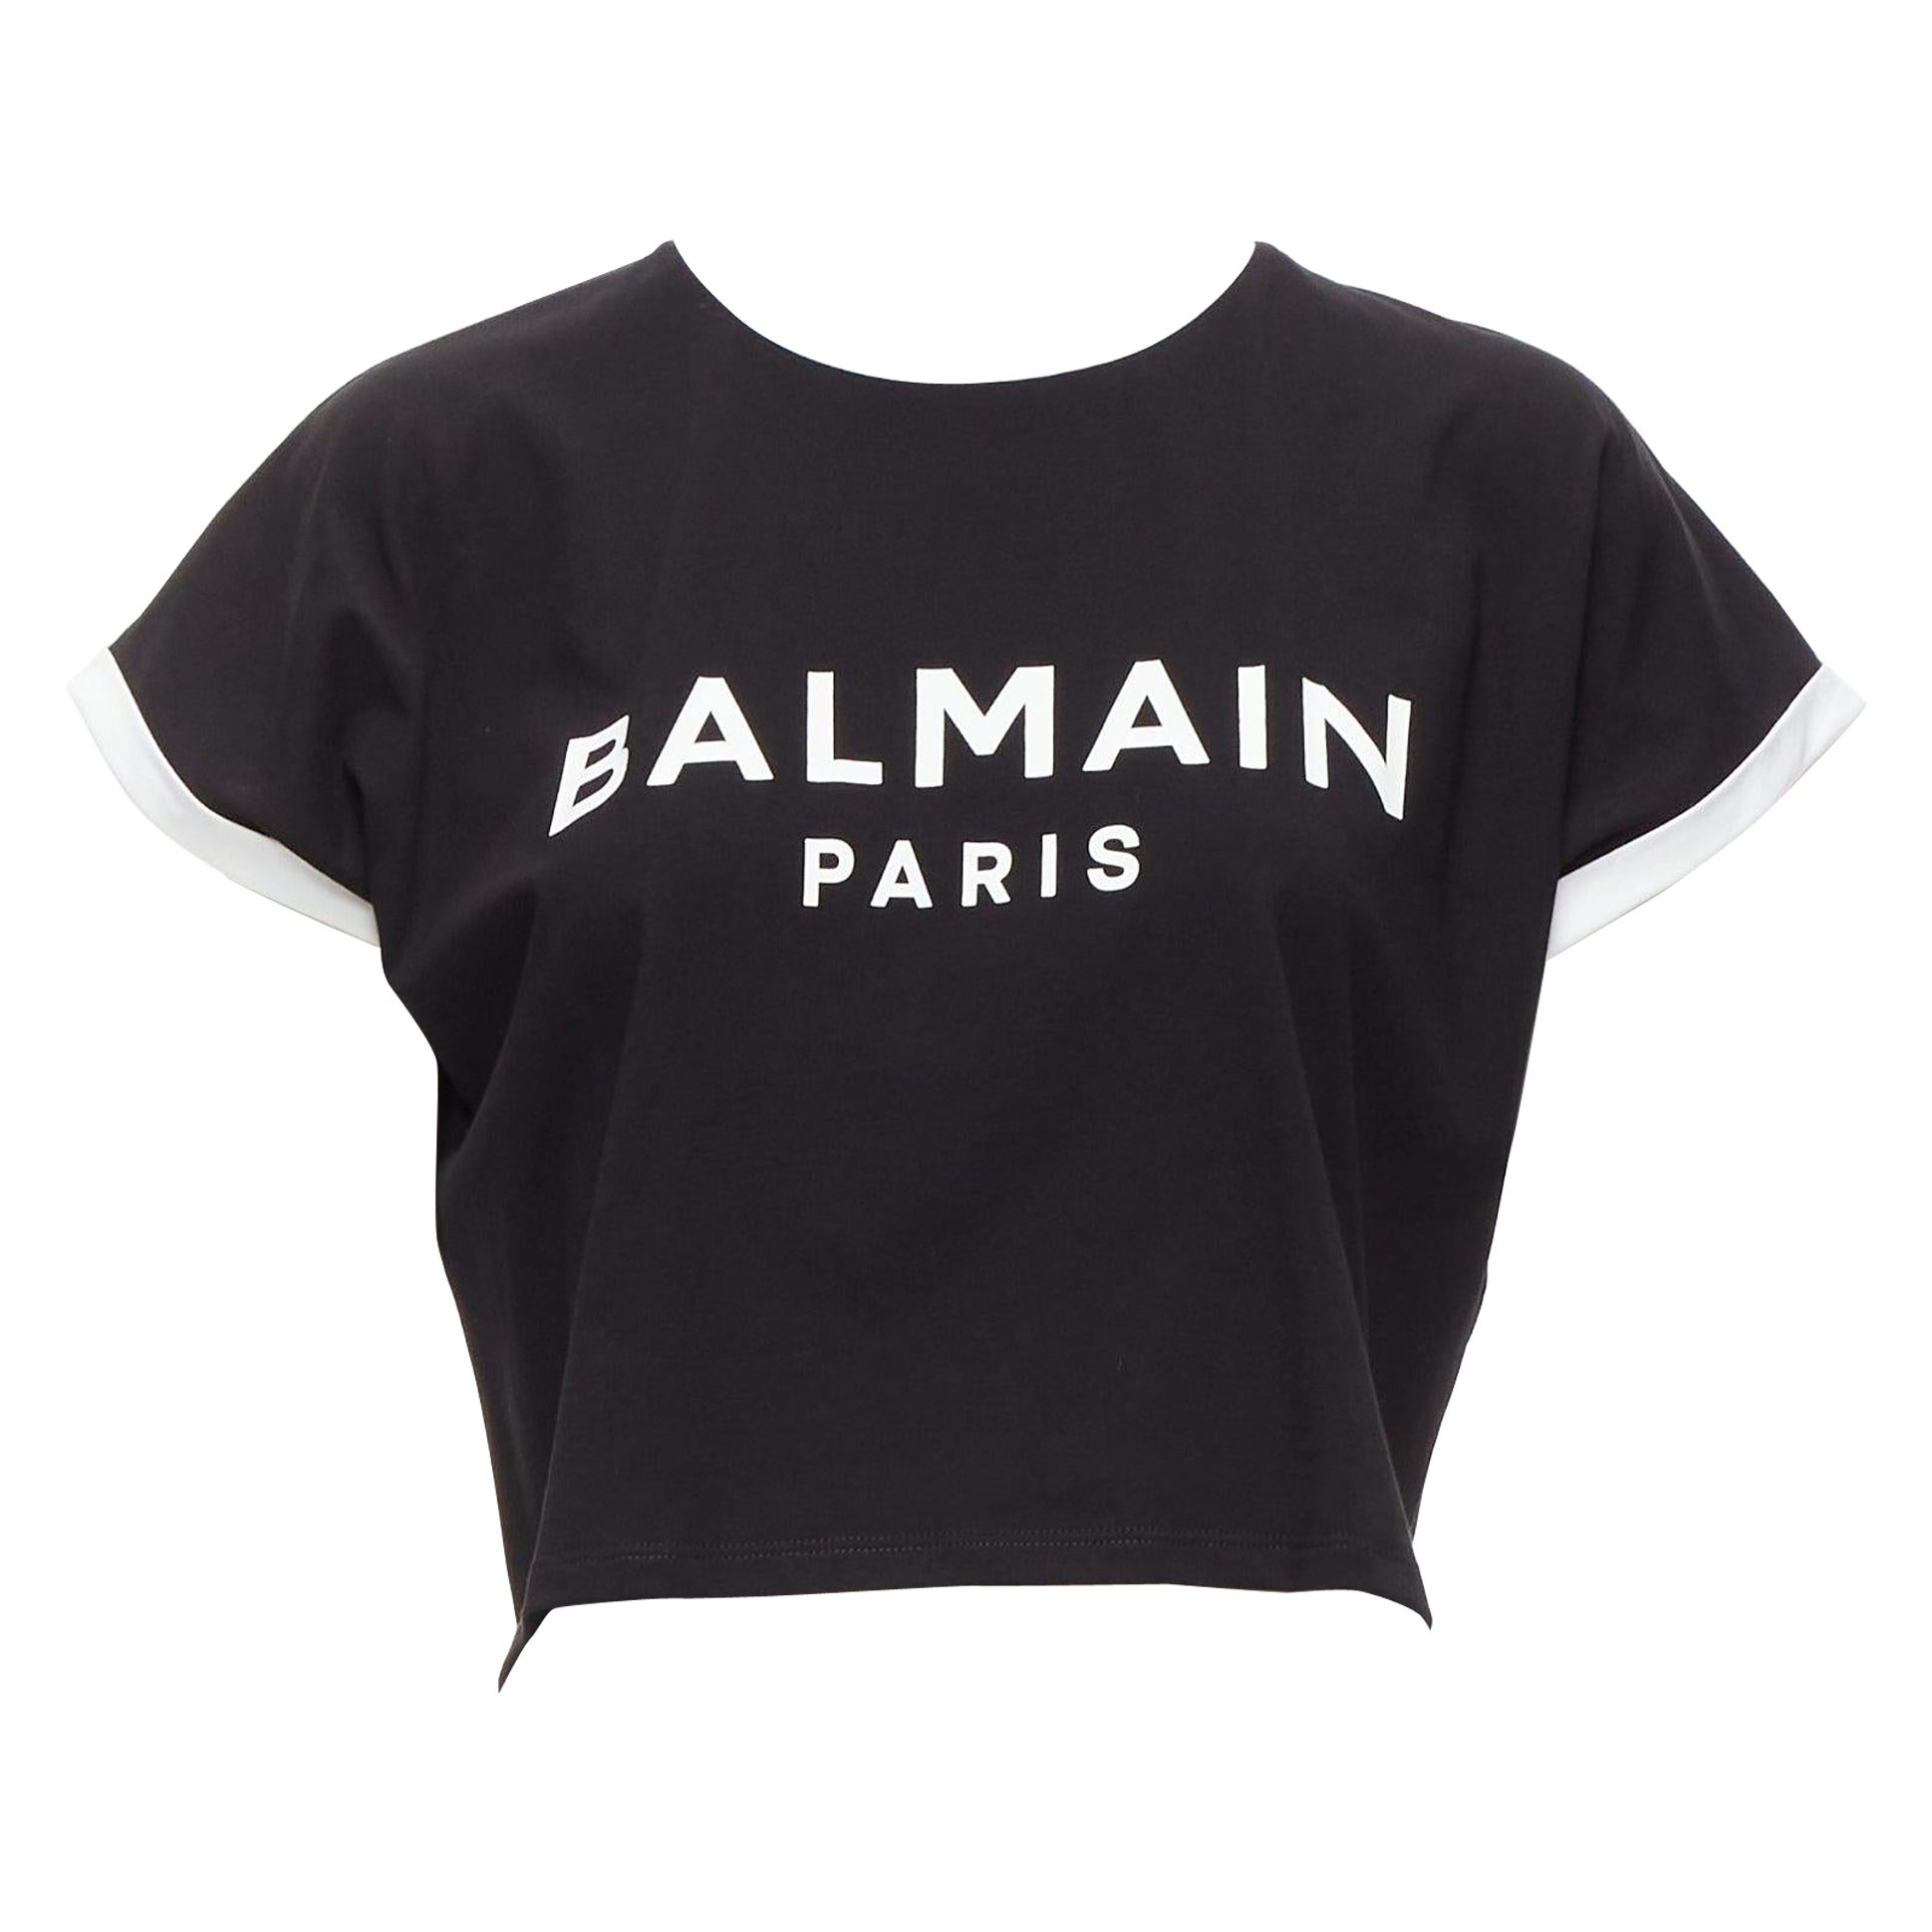 Where can I buy a Balmain T-shirt?